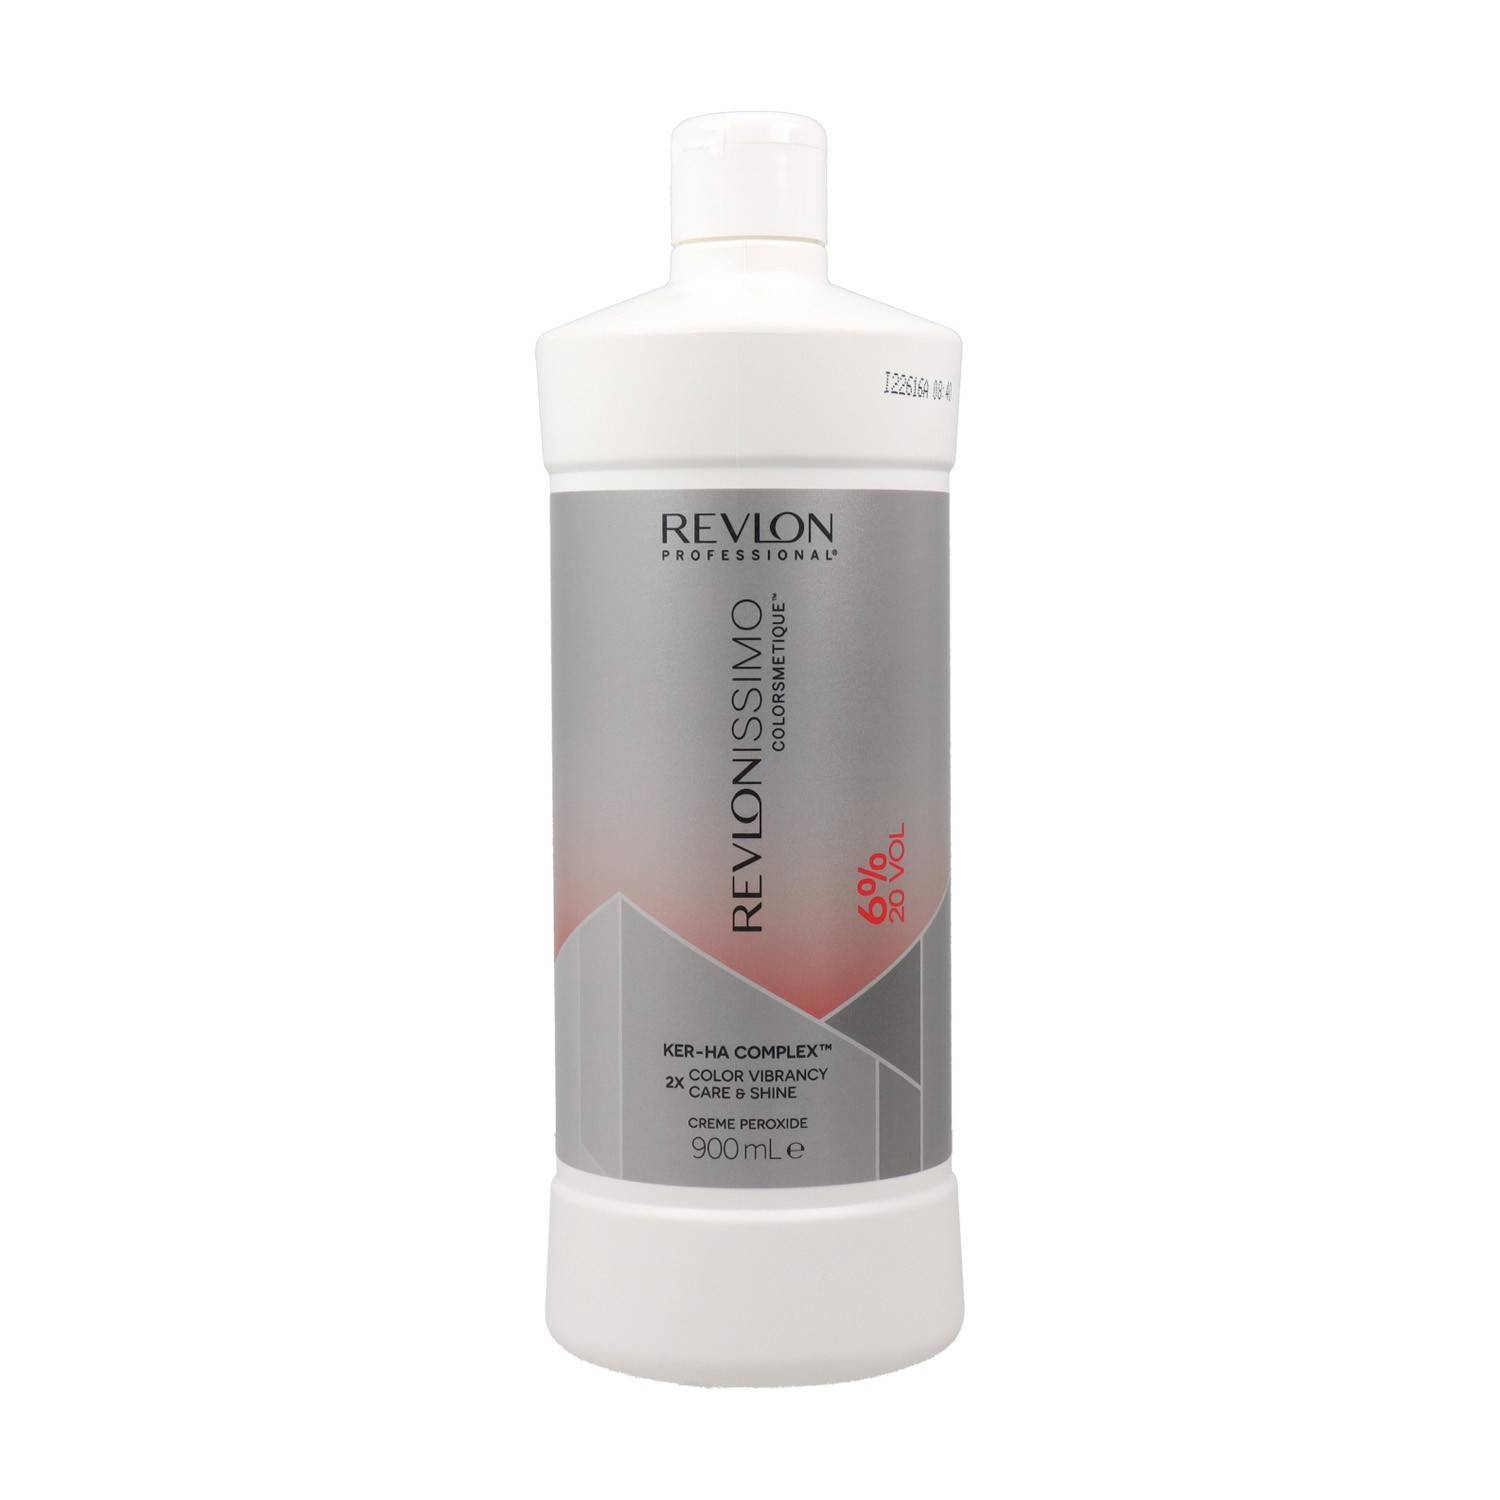 Revlonissimo Creme Peroxide 20vol (6%) 900 ml